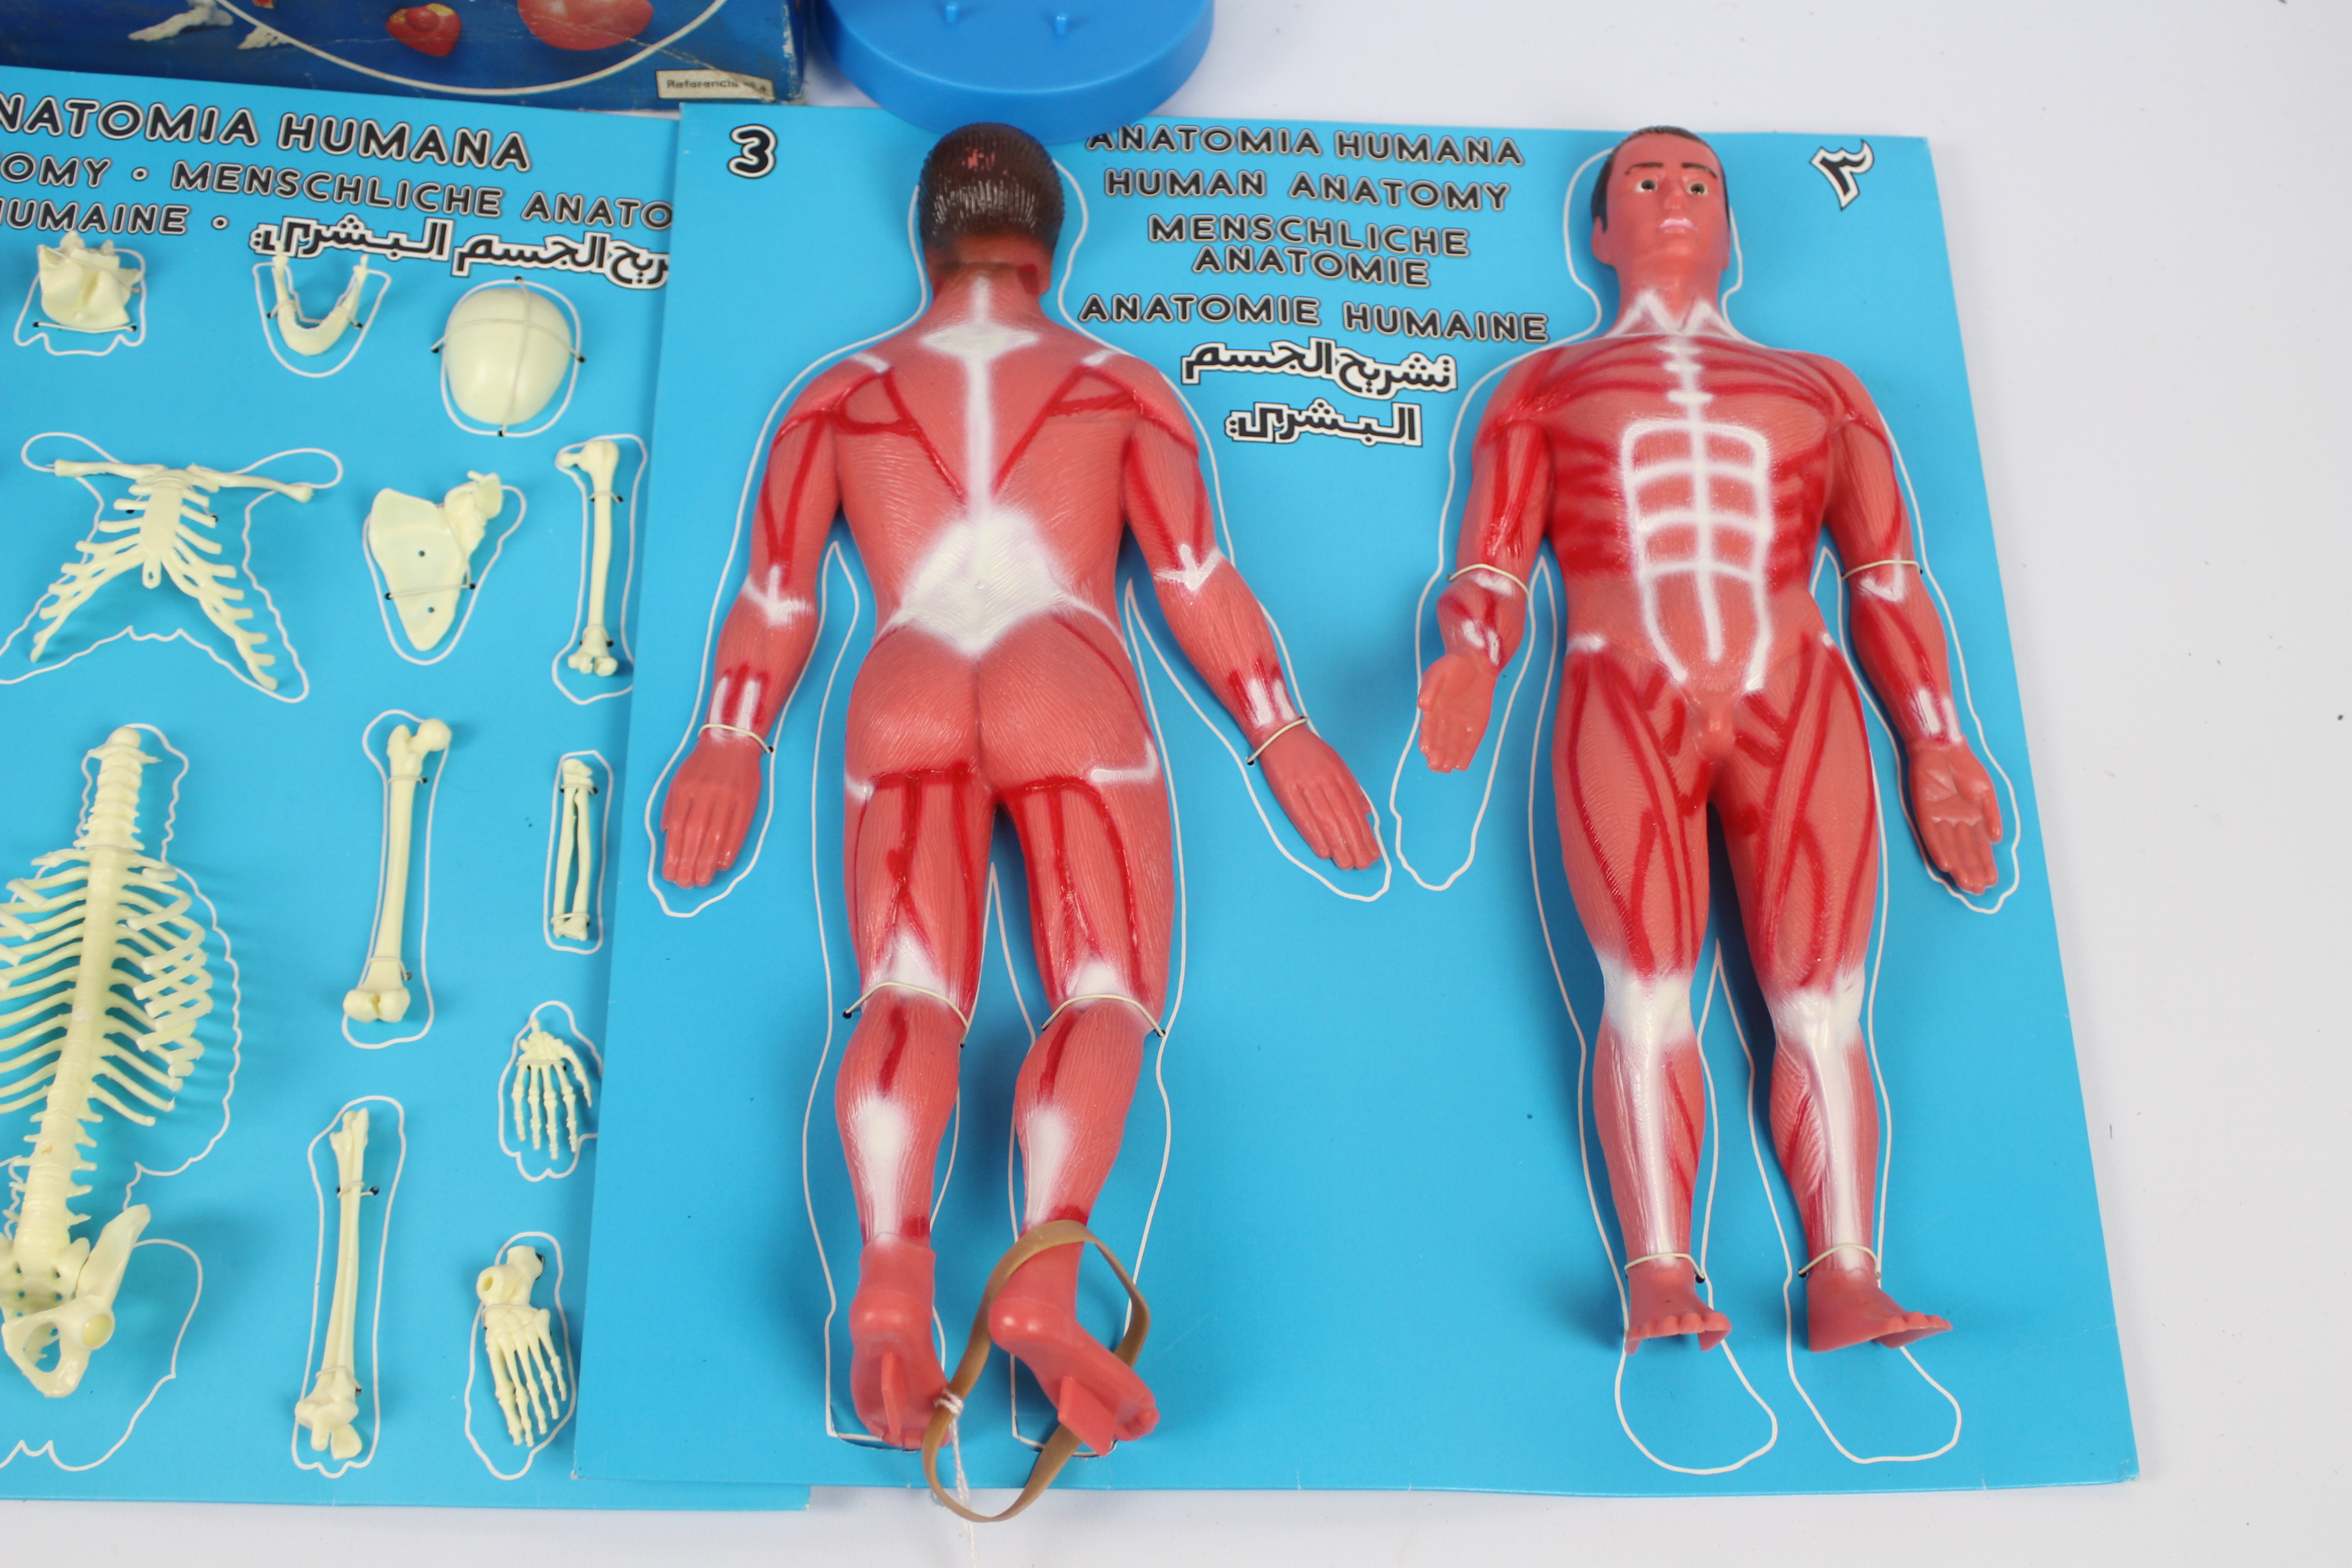 Human Anatomy - Anatomia Humania by Serima. A rare Spanish plastic 1:5 scale, human anatomy model. - Image 3 of 5